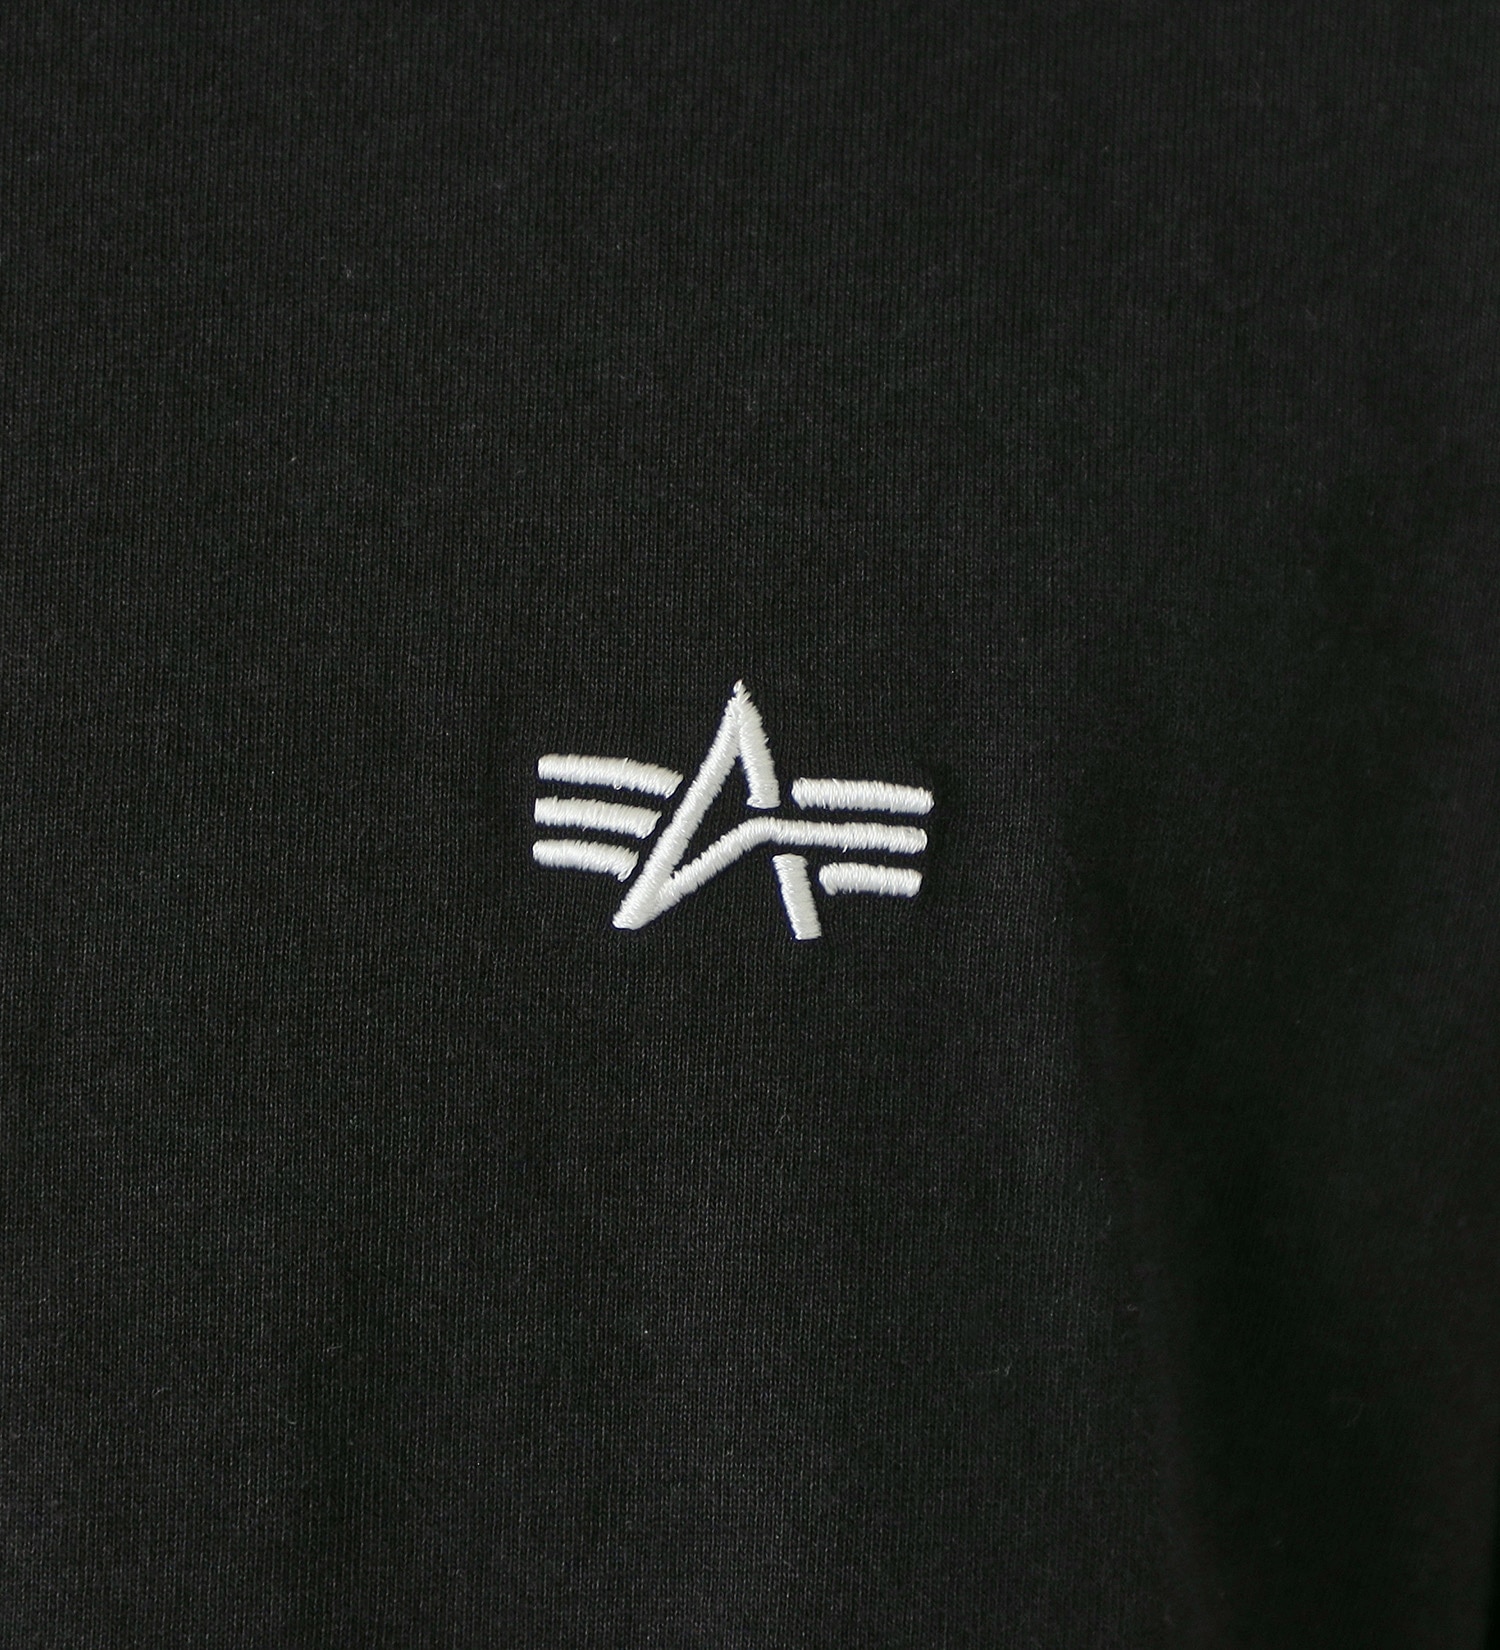 ALPHA(アルファ)の【GW SALE】【大きいサイズ】バックプリントボックスロゴ 長袖Tシャツ(FIGHTER)|トップス/Tシャツ/カットソー/メンズ|ブラック